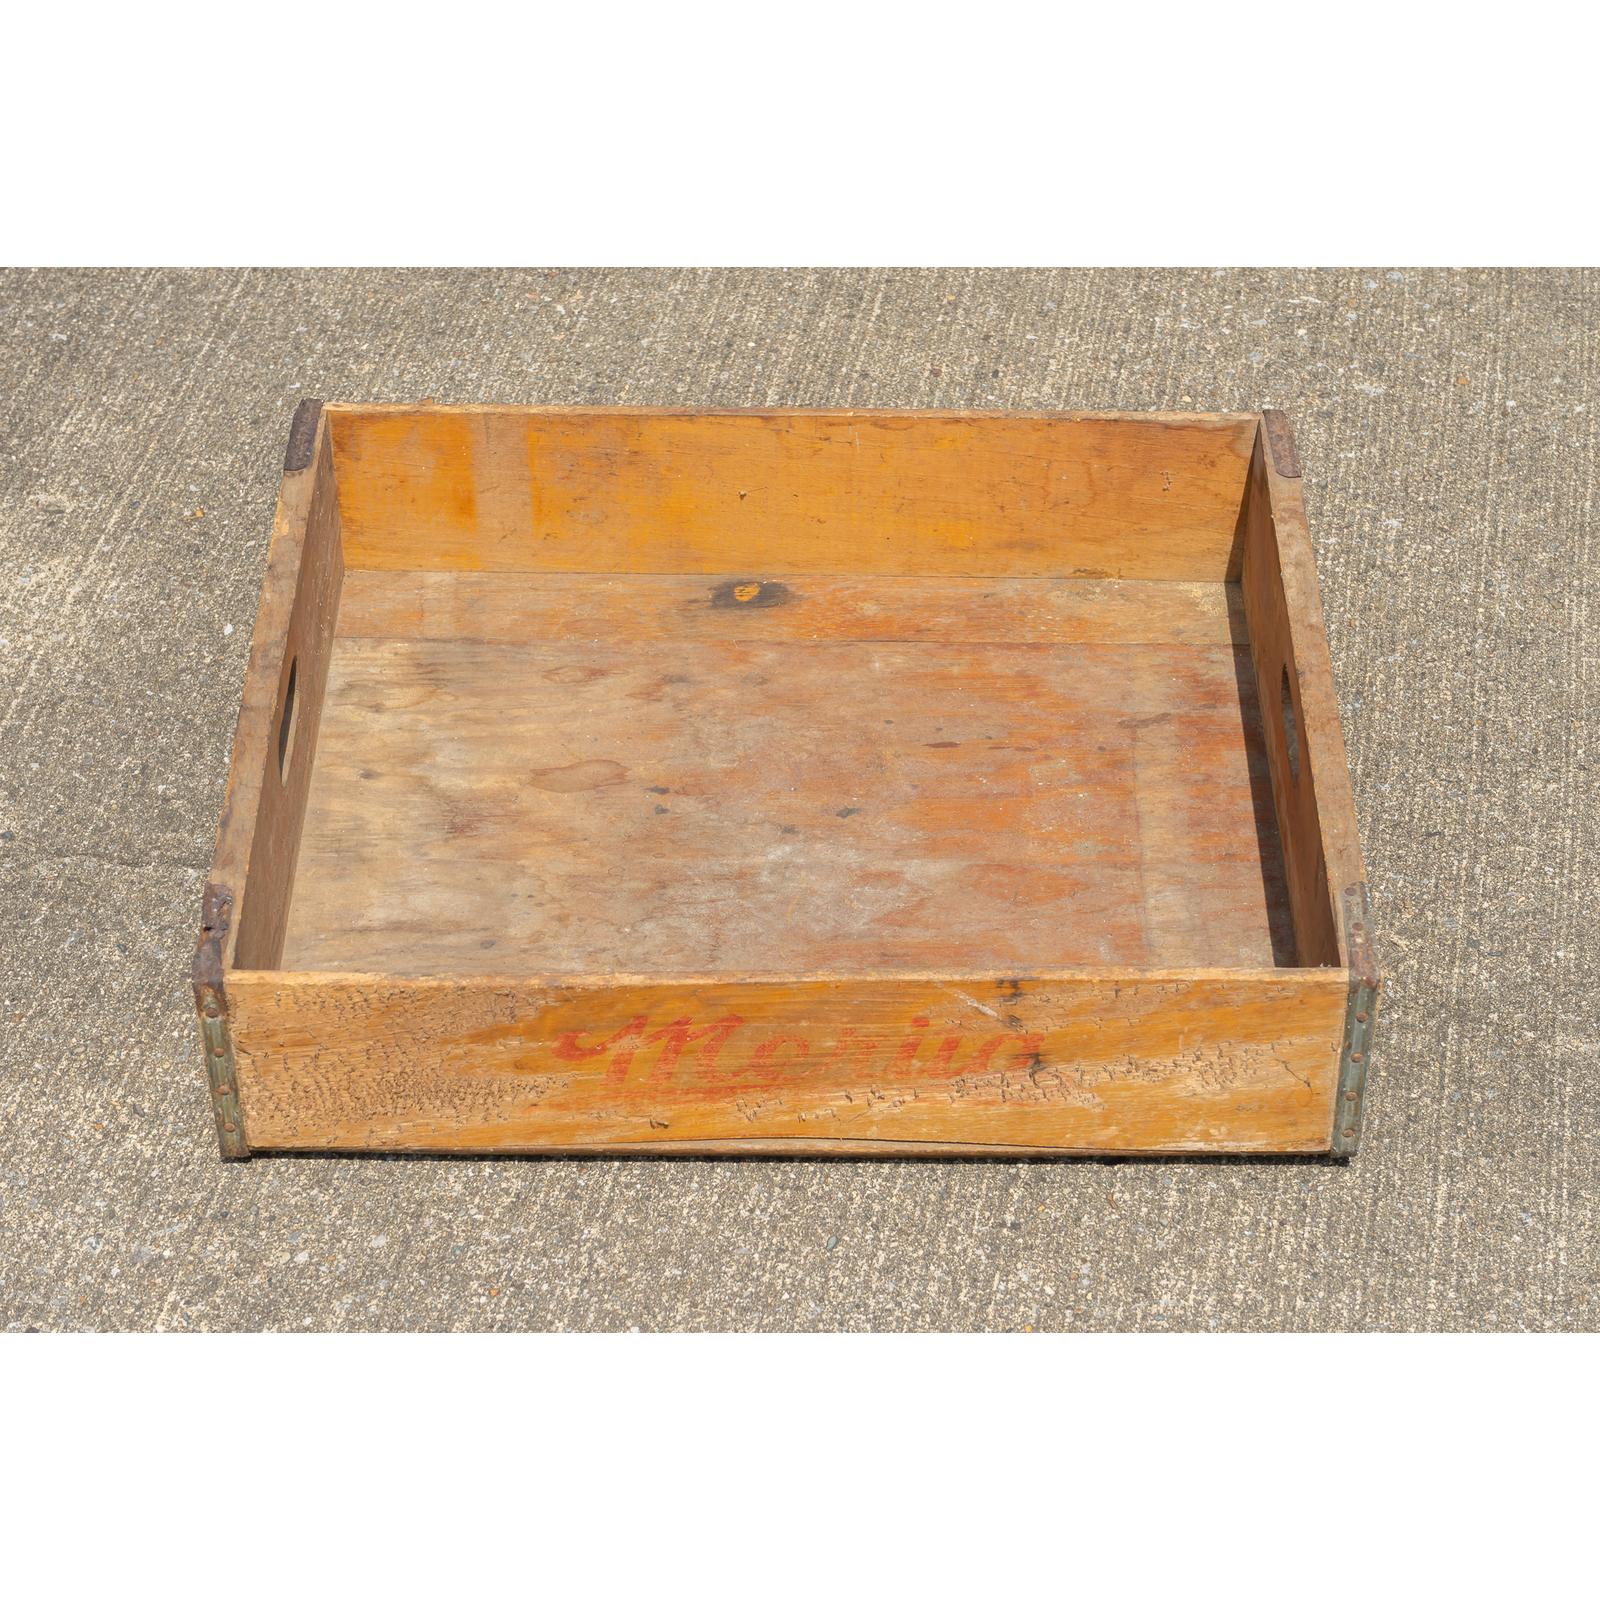 Breadbox – Box, Incorporated